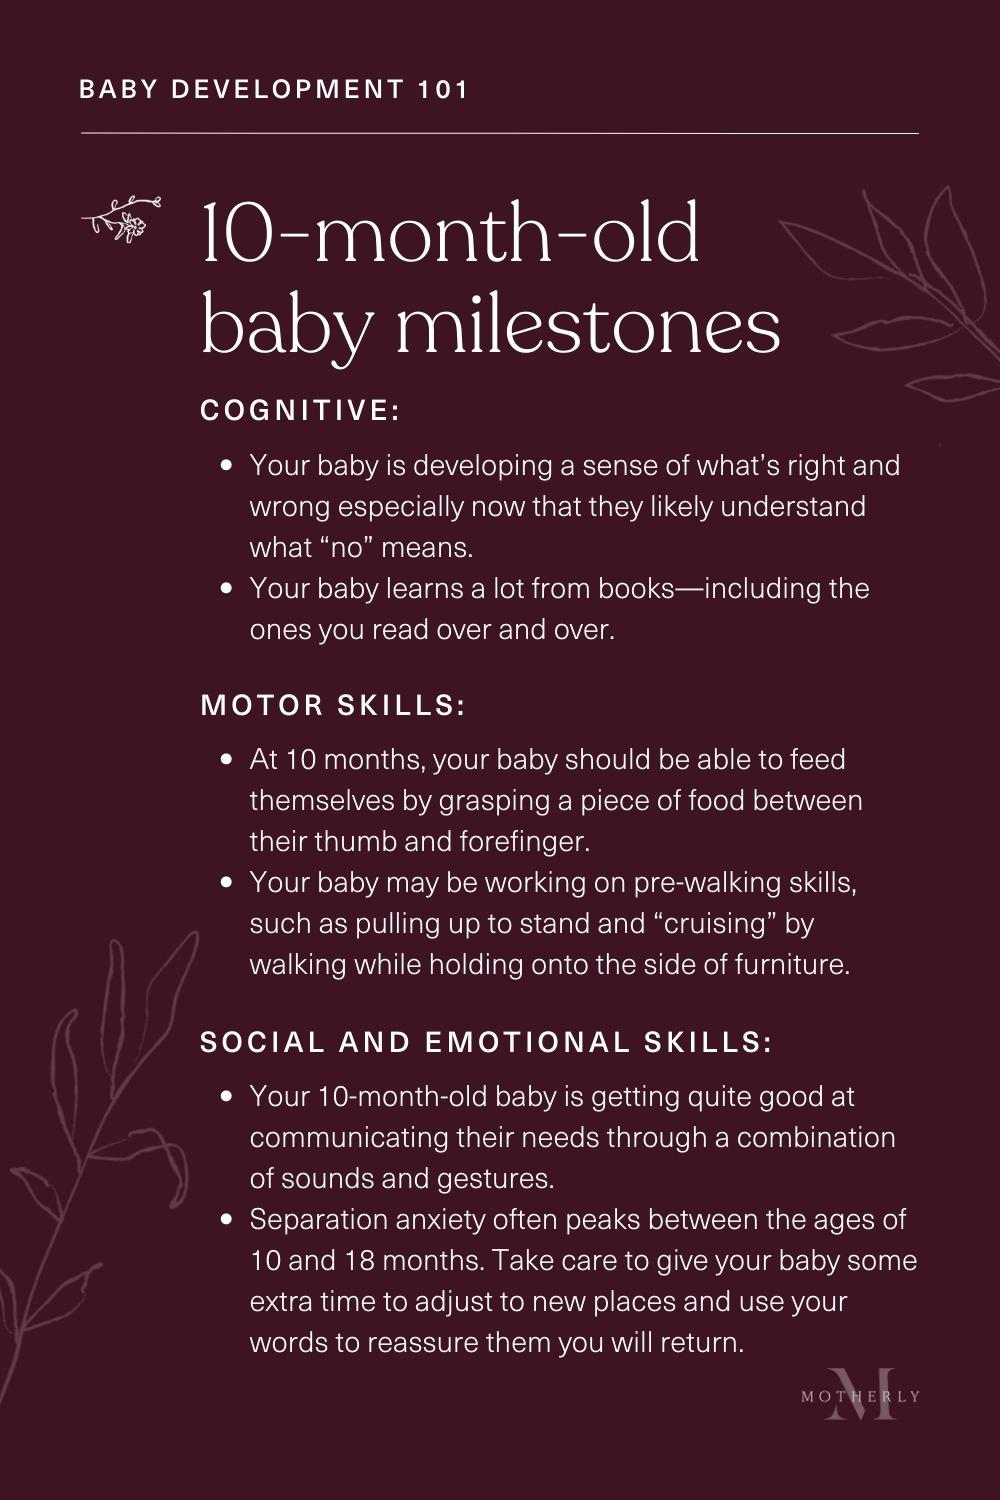 summary of 10-month-old baby milestones - sensory and motor development